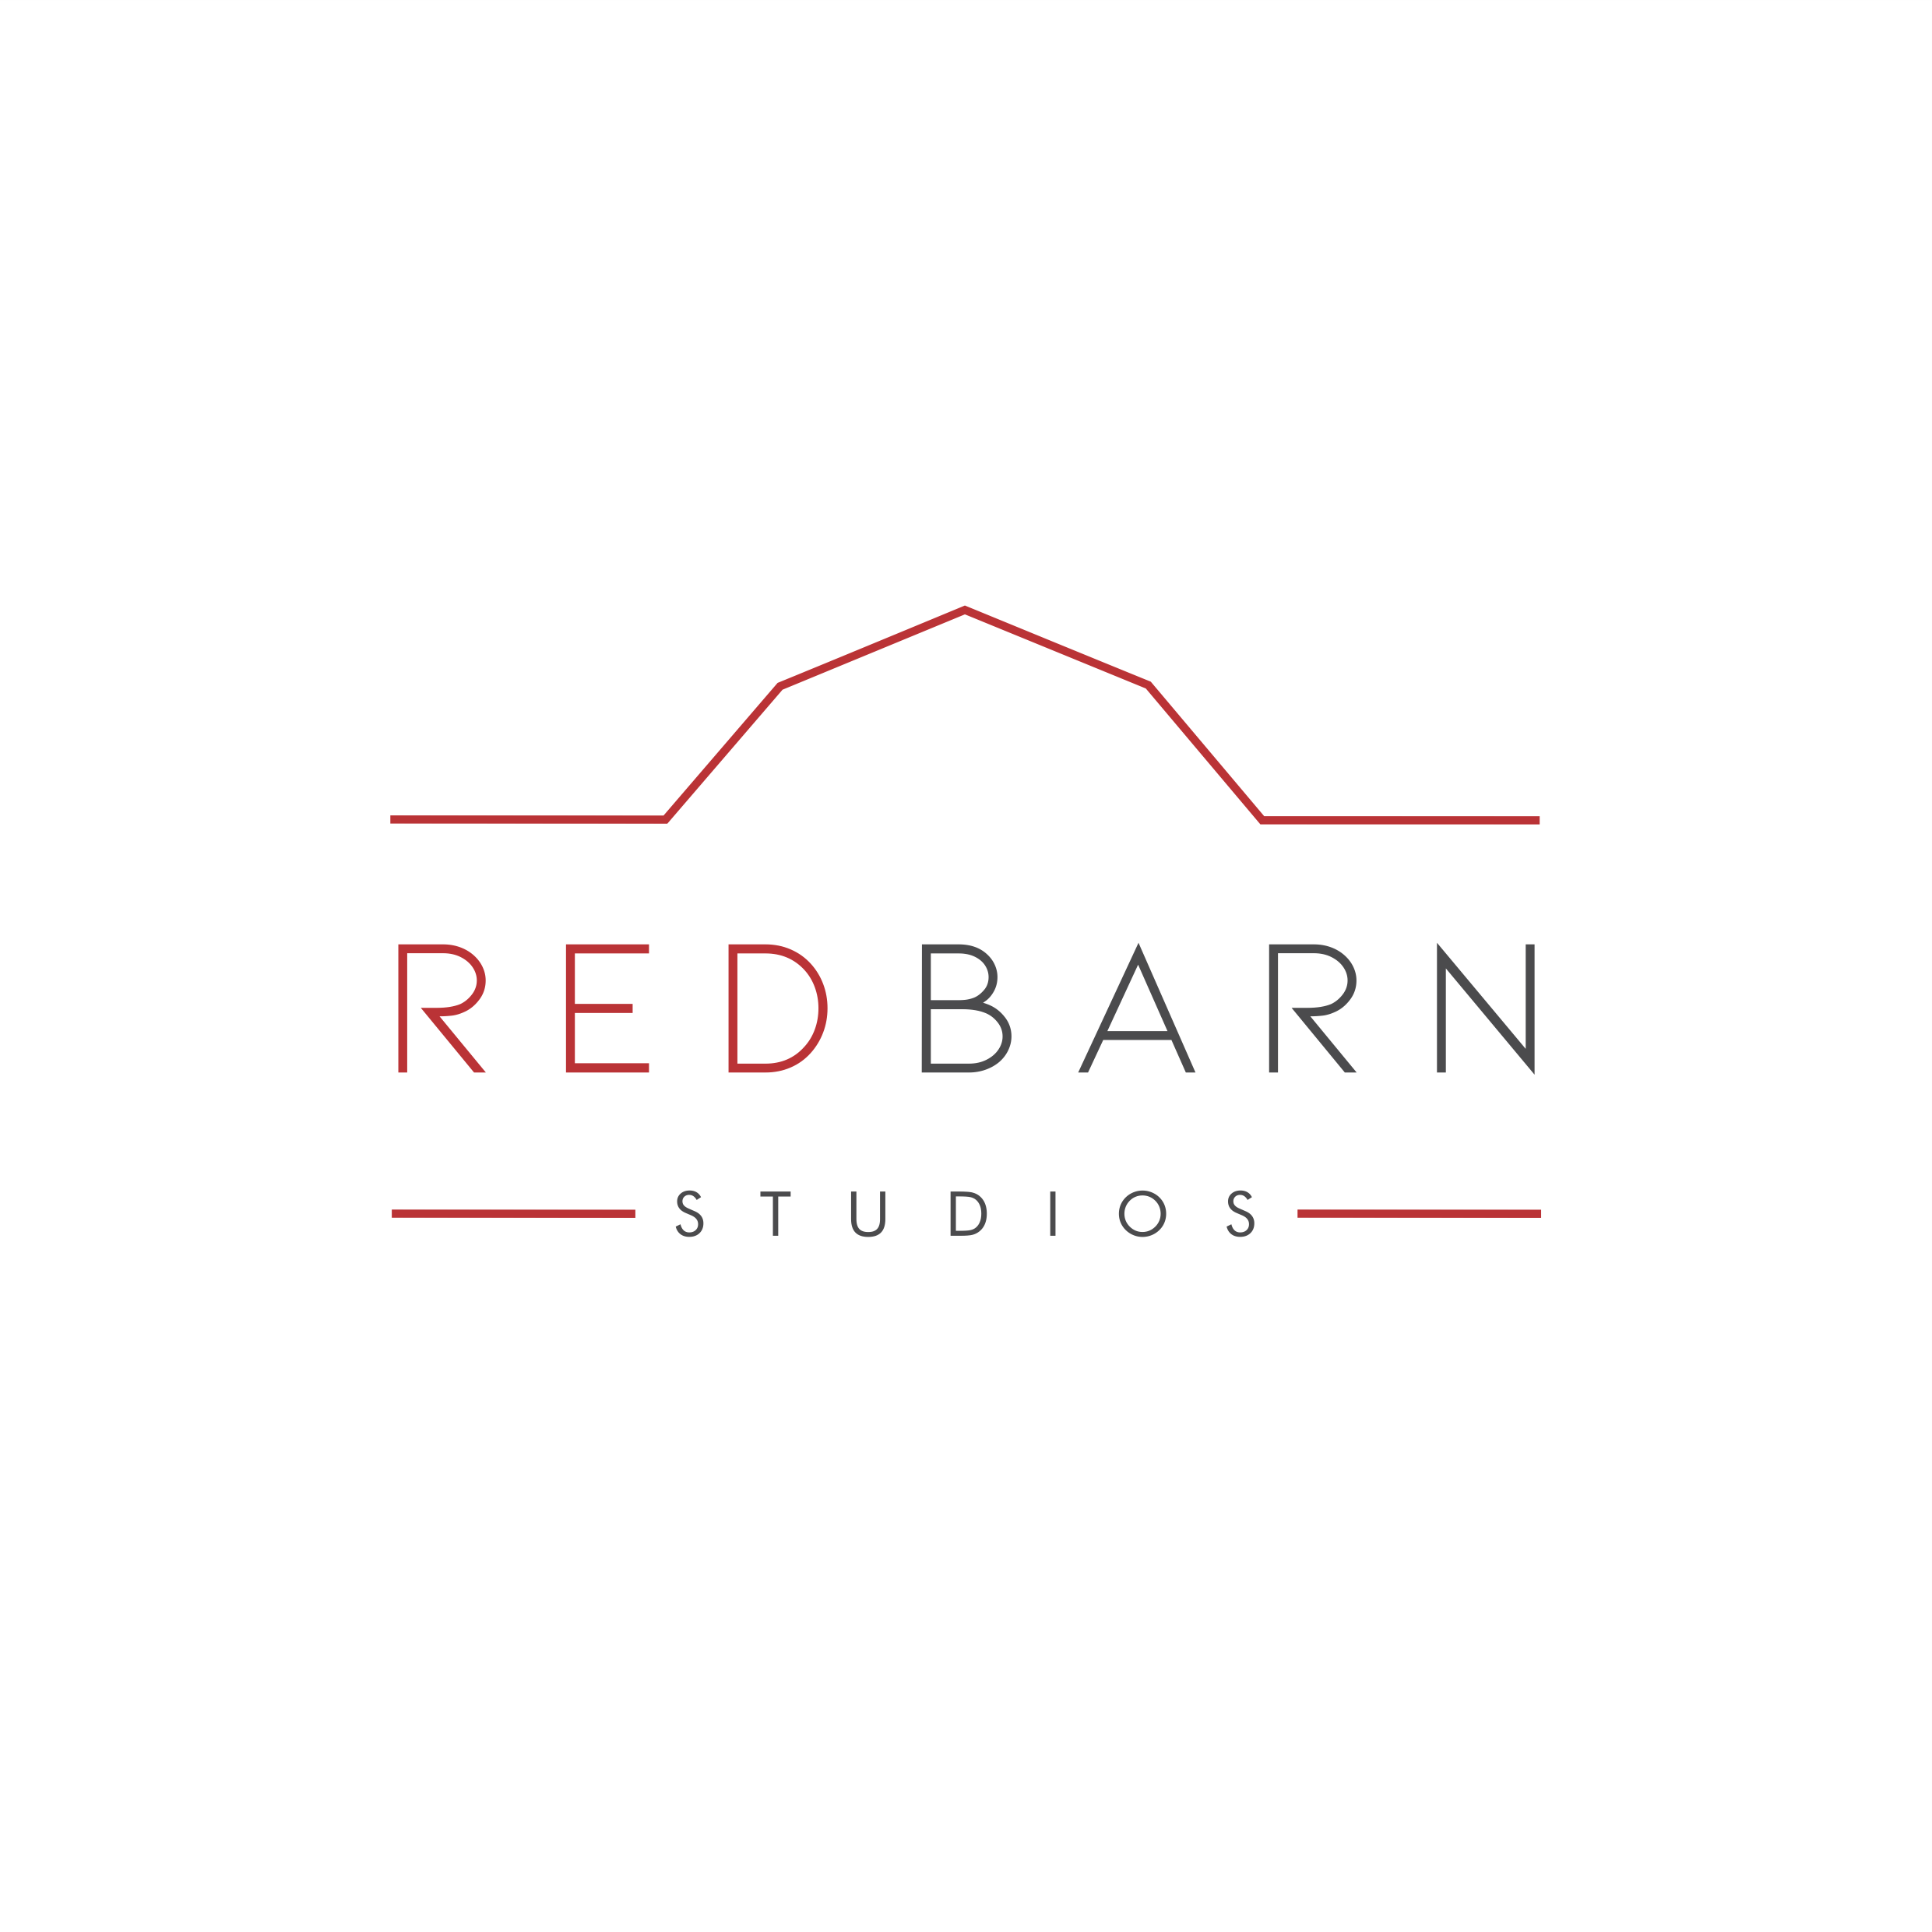 Red Barn Studios